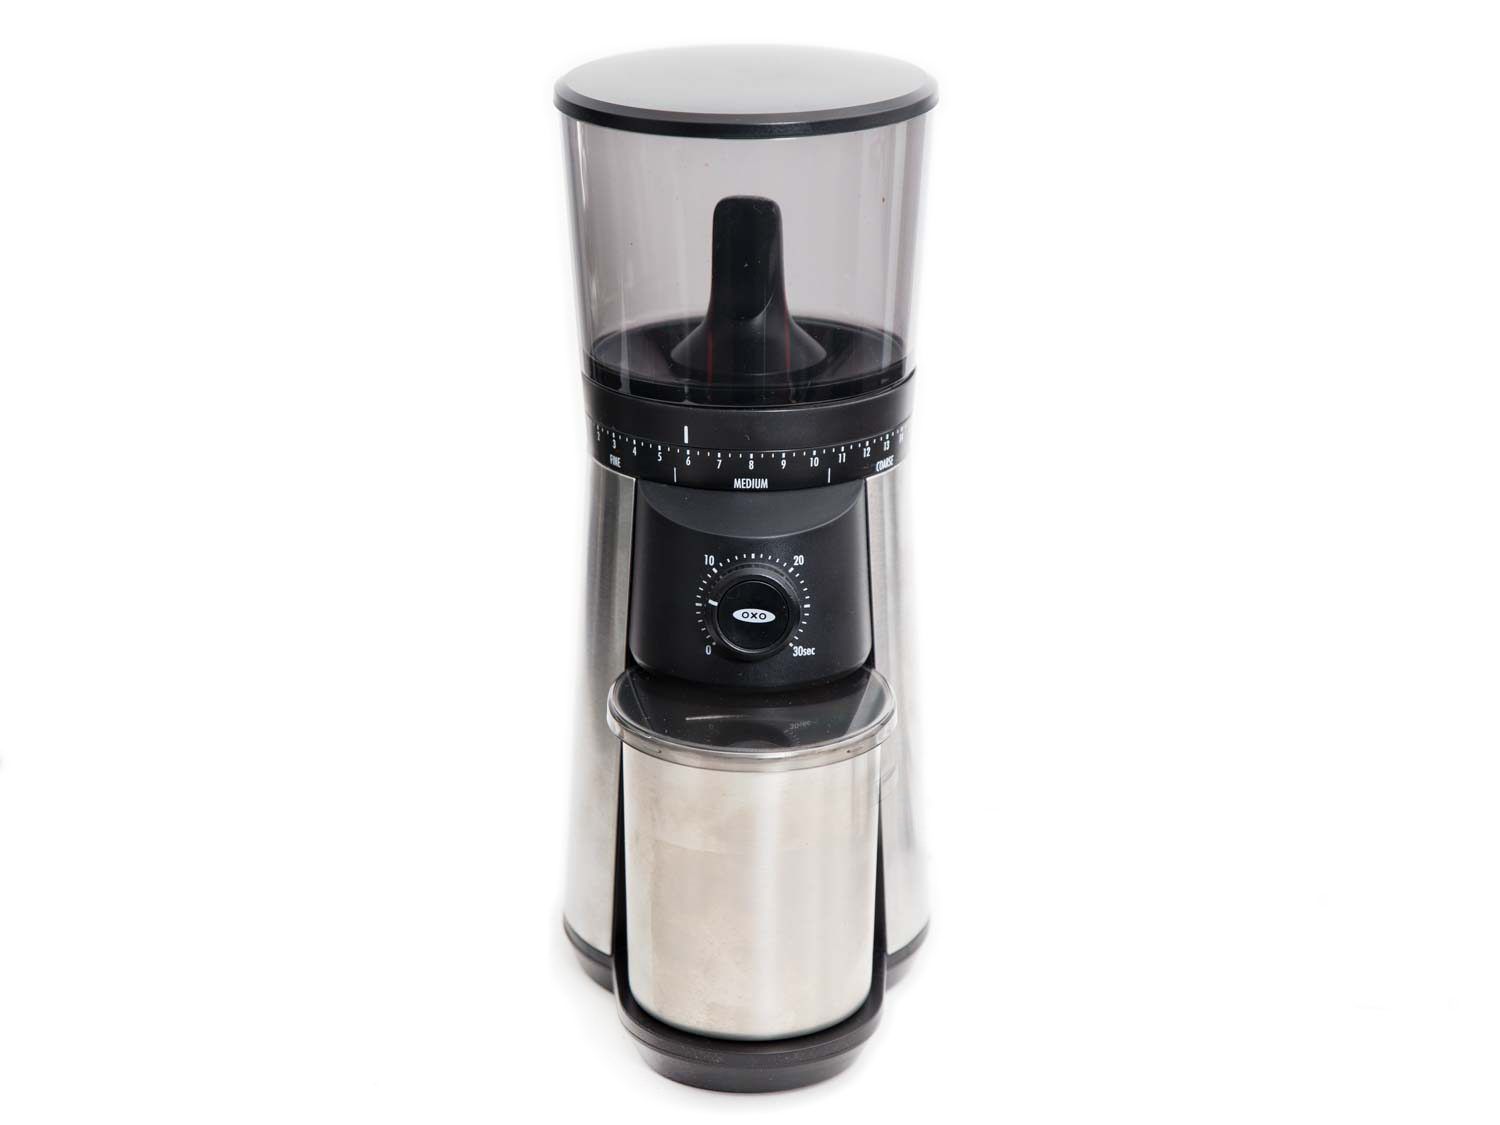 OXO's burr coffee grinder